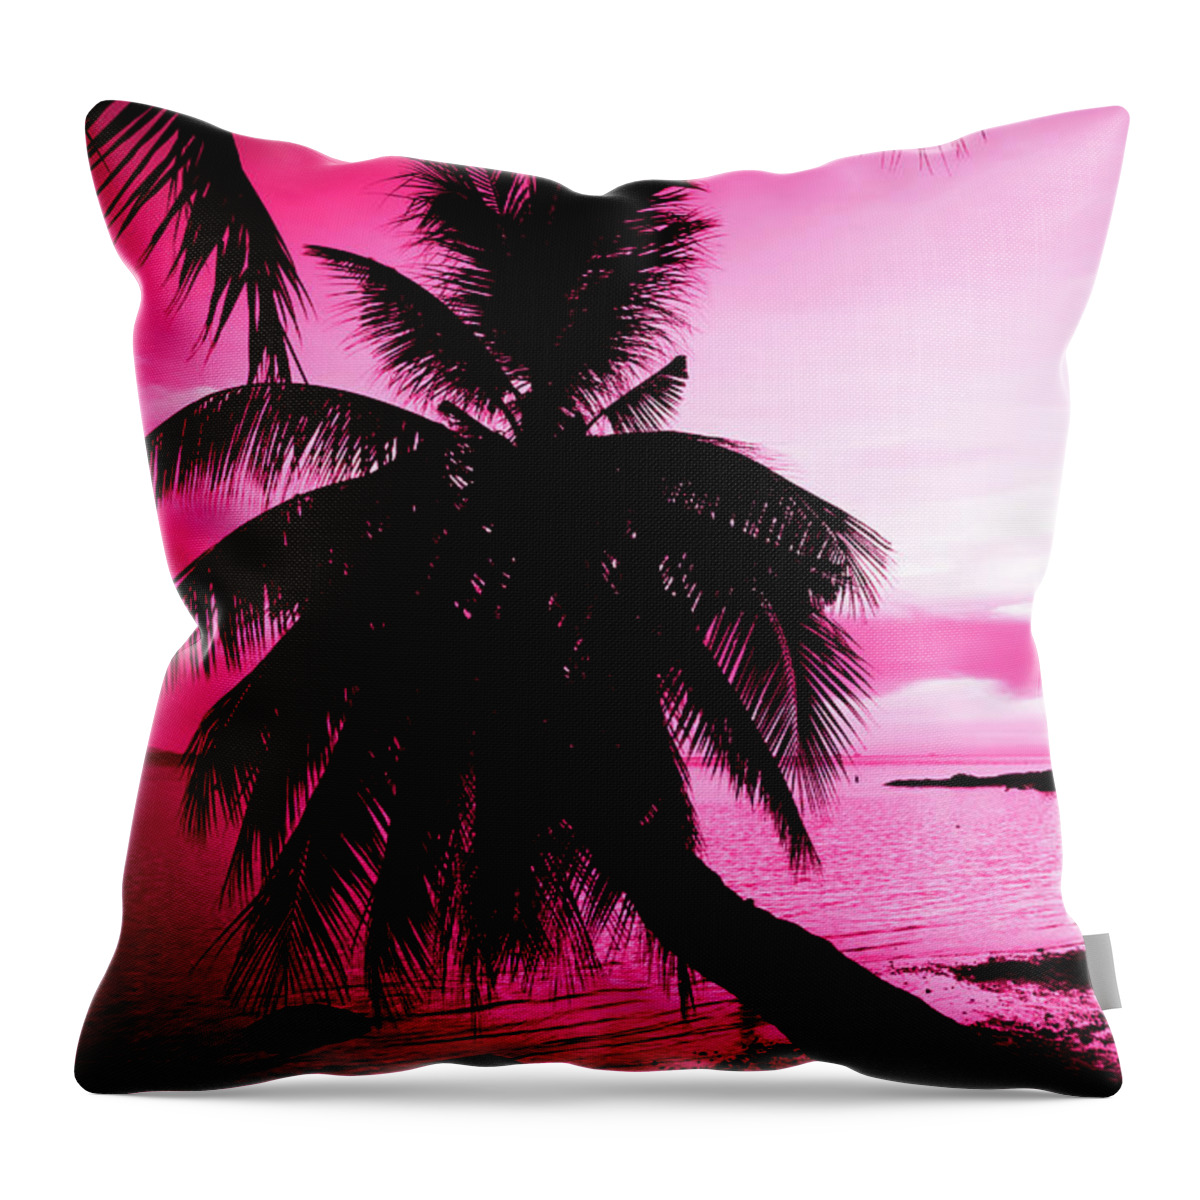 Sunset Throw Pillow featuring the photograph Tropical Pink by Josu Ozkaritz